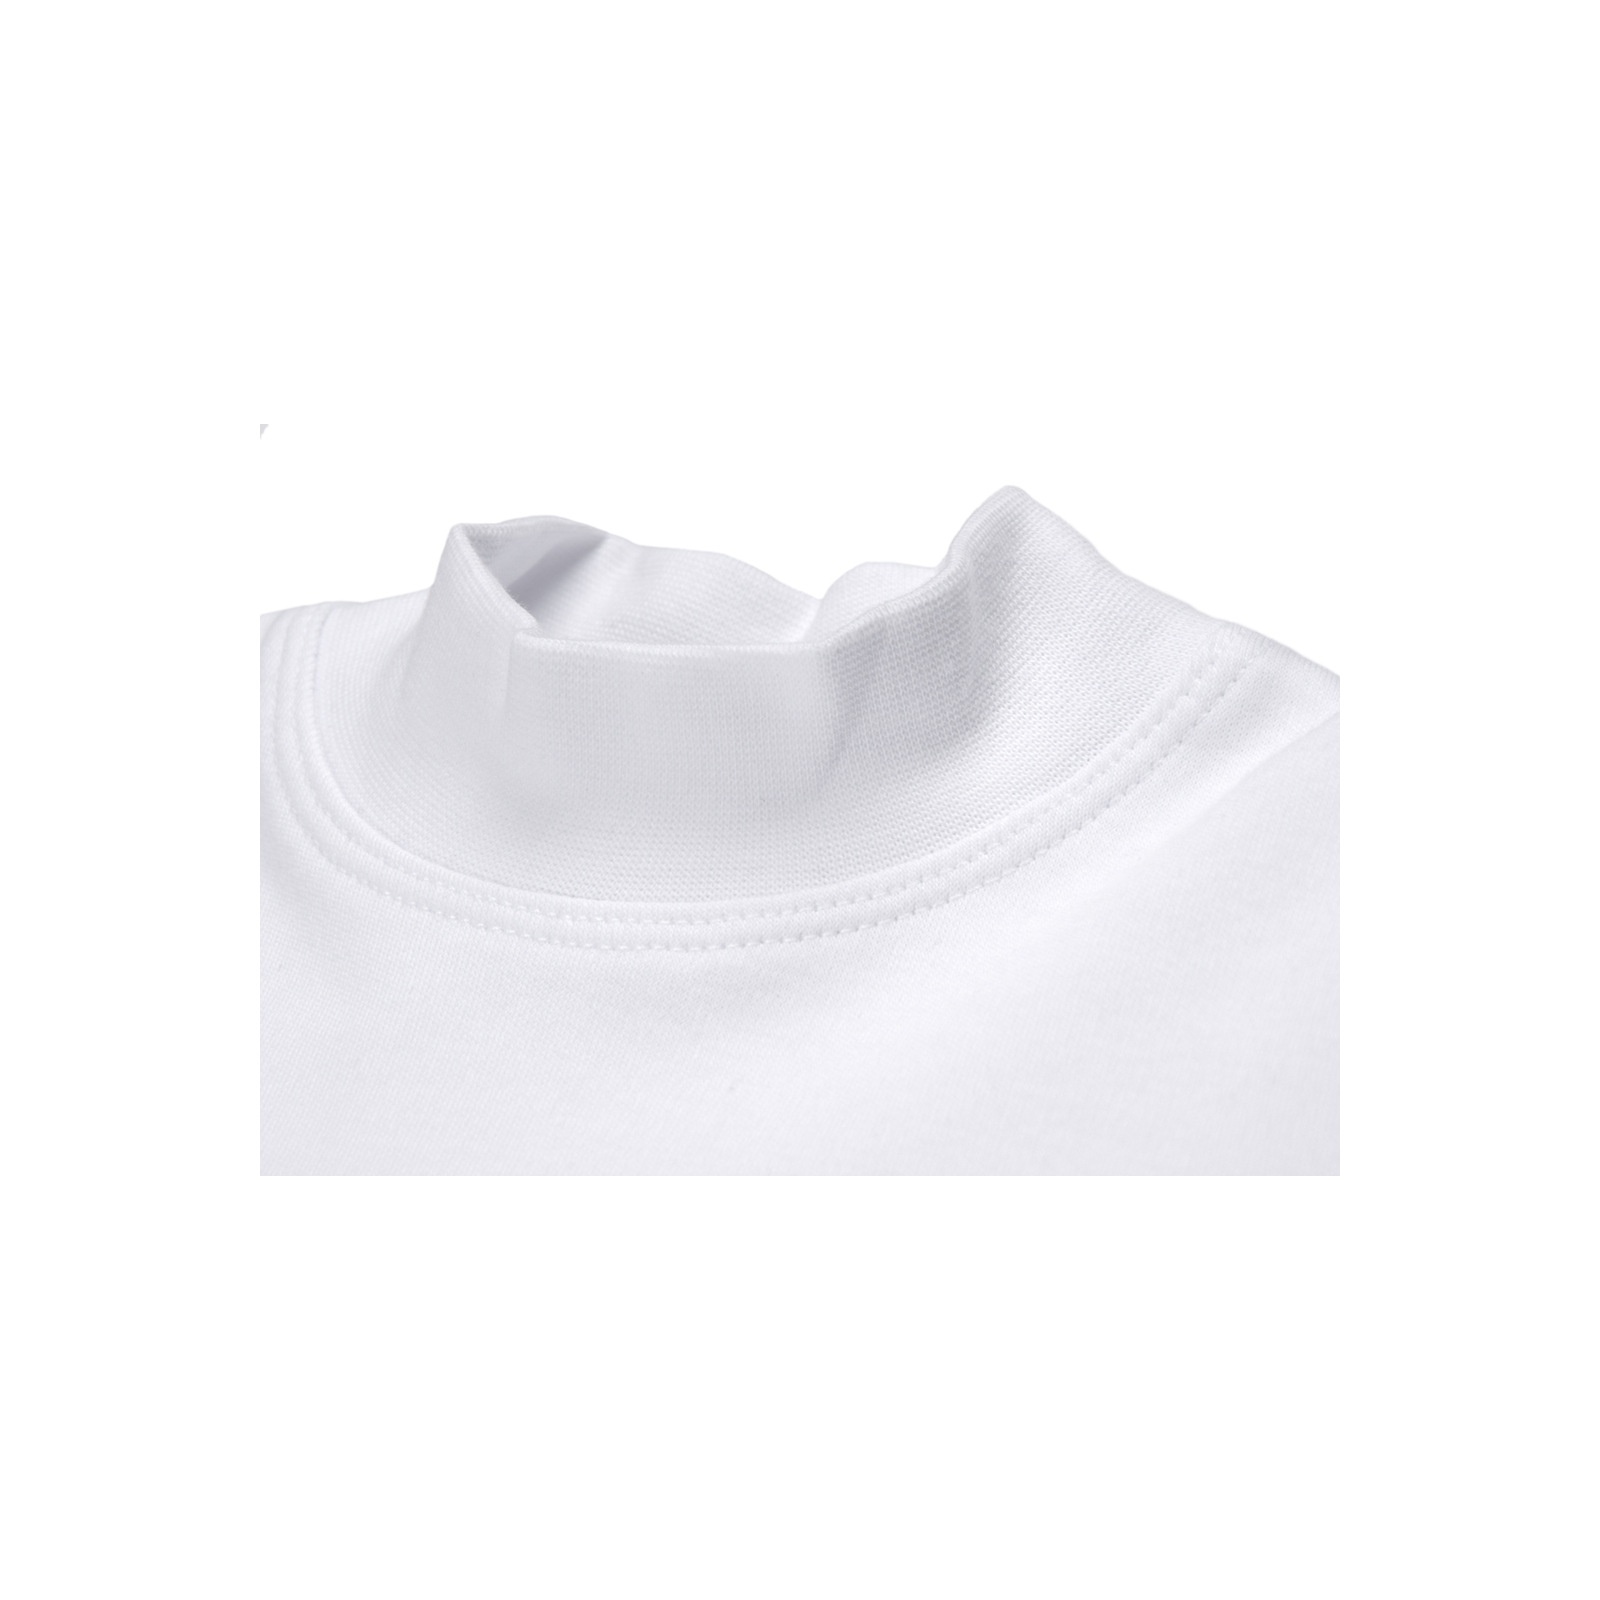 Кофта Lovetti водолазка белая (1011-104-white) изображение 3